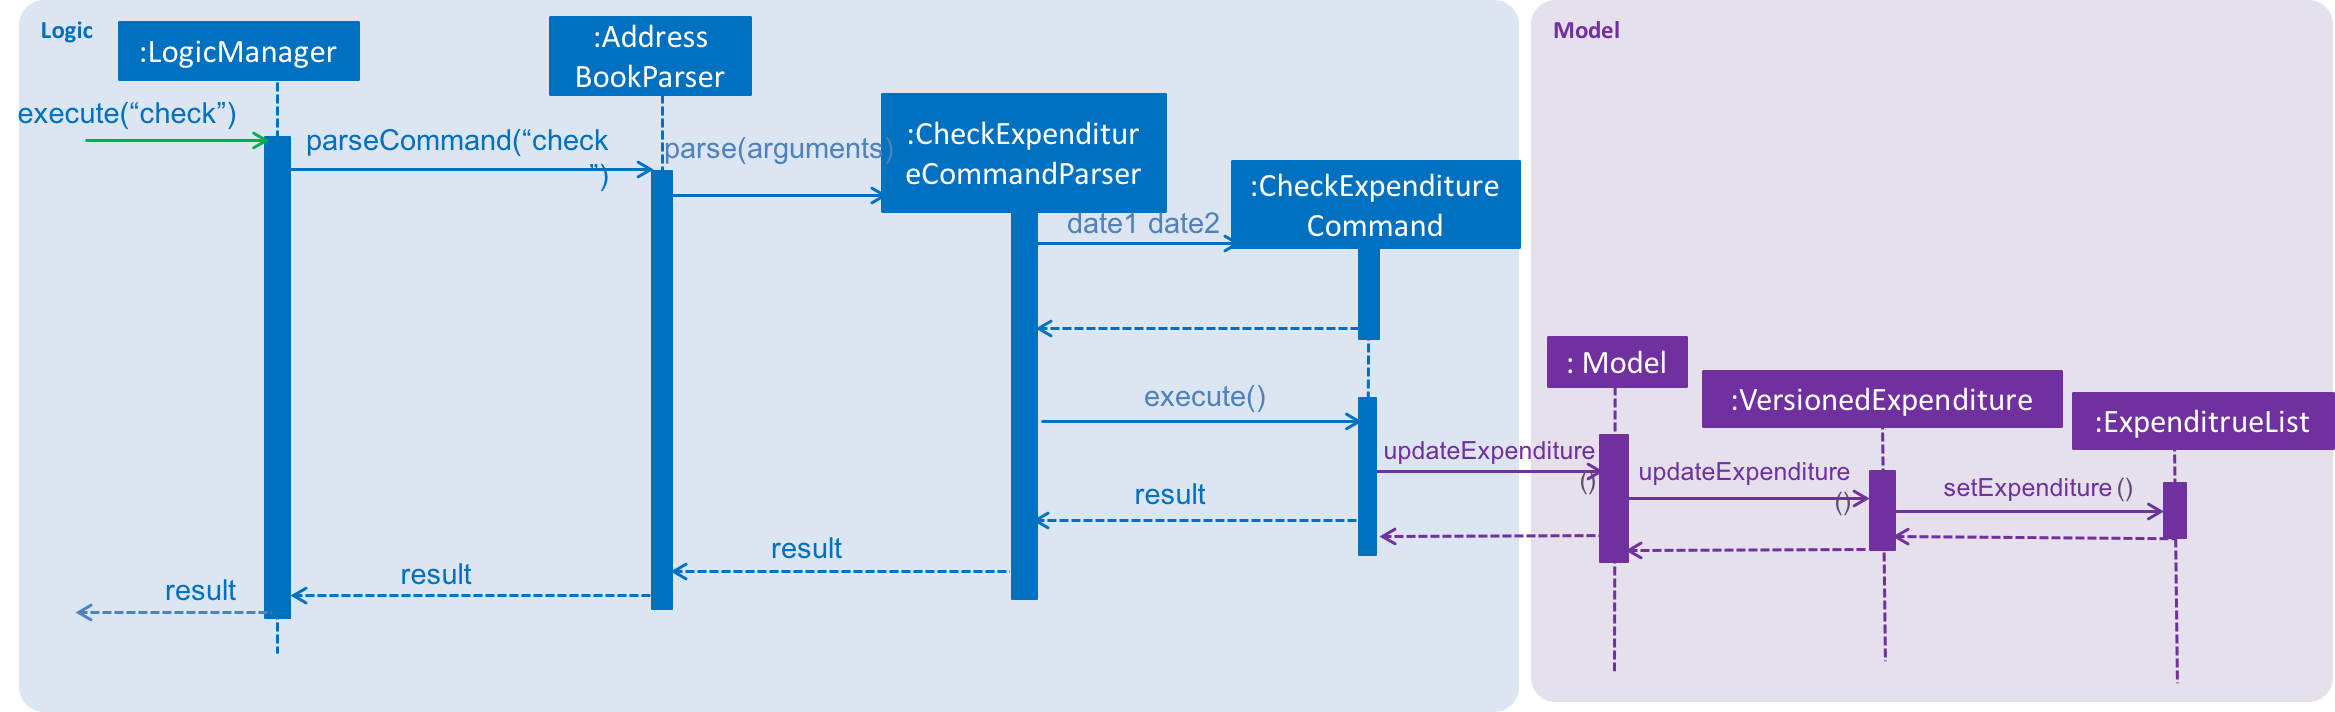 CheckSequenceDiagram